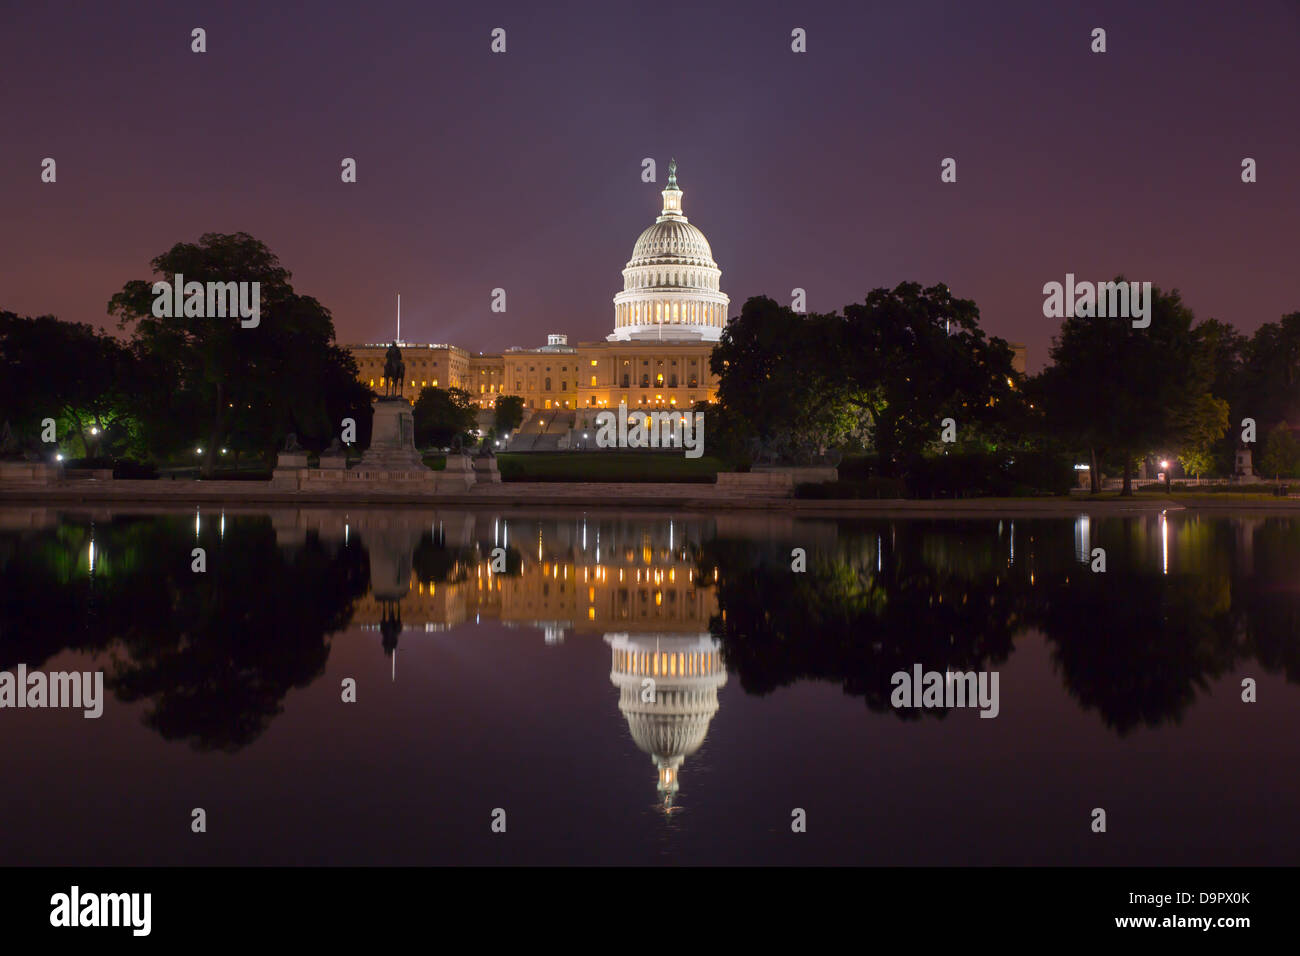 US Capitol Building at night, Washington D.C., USA Stock Photo